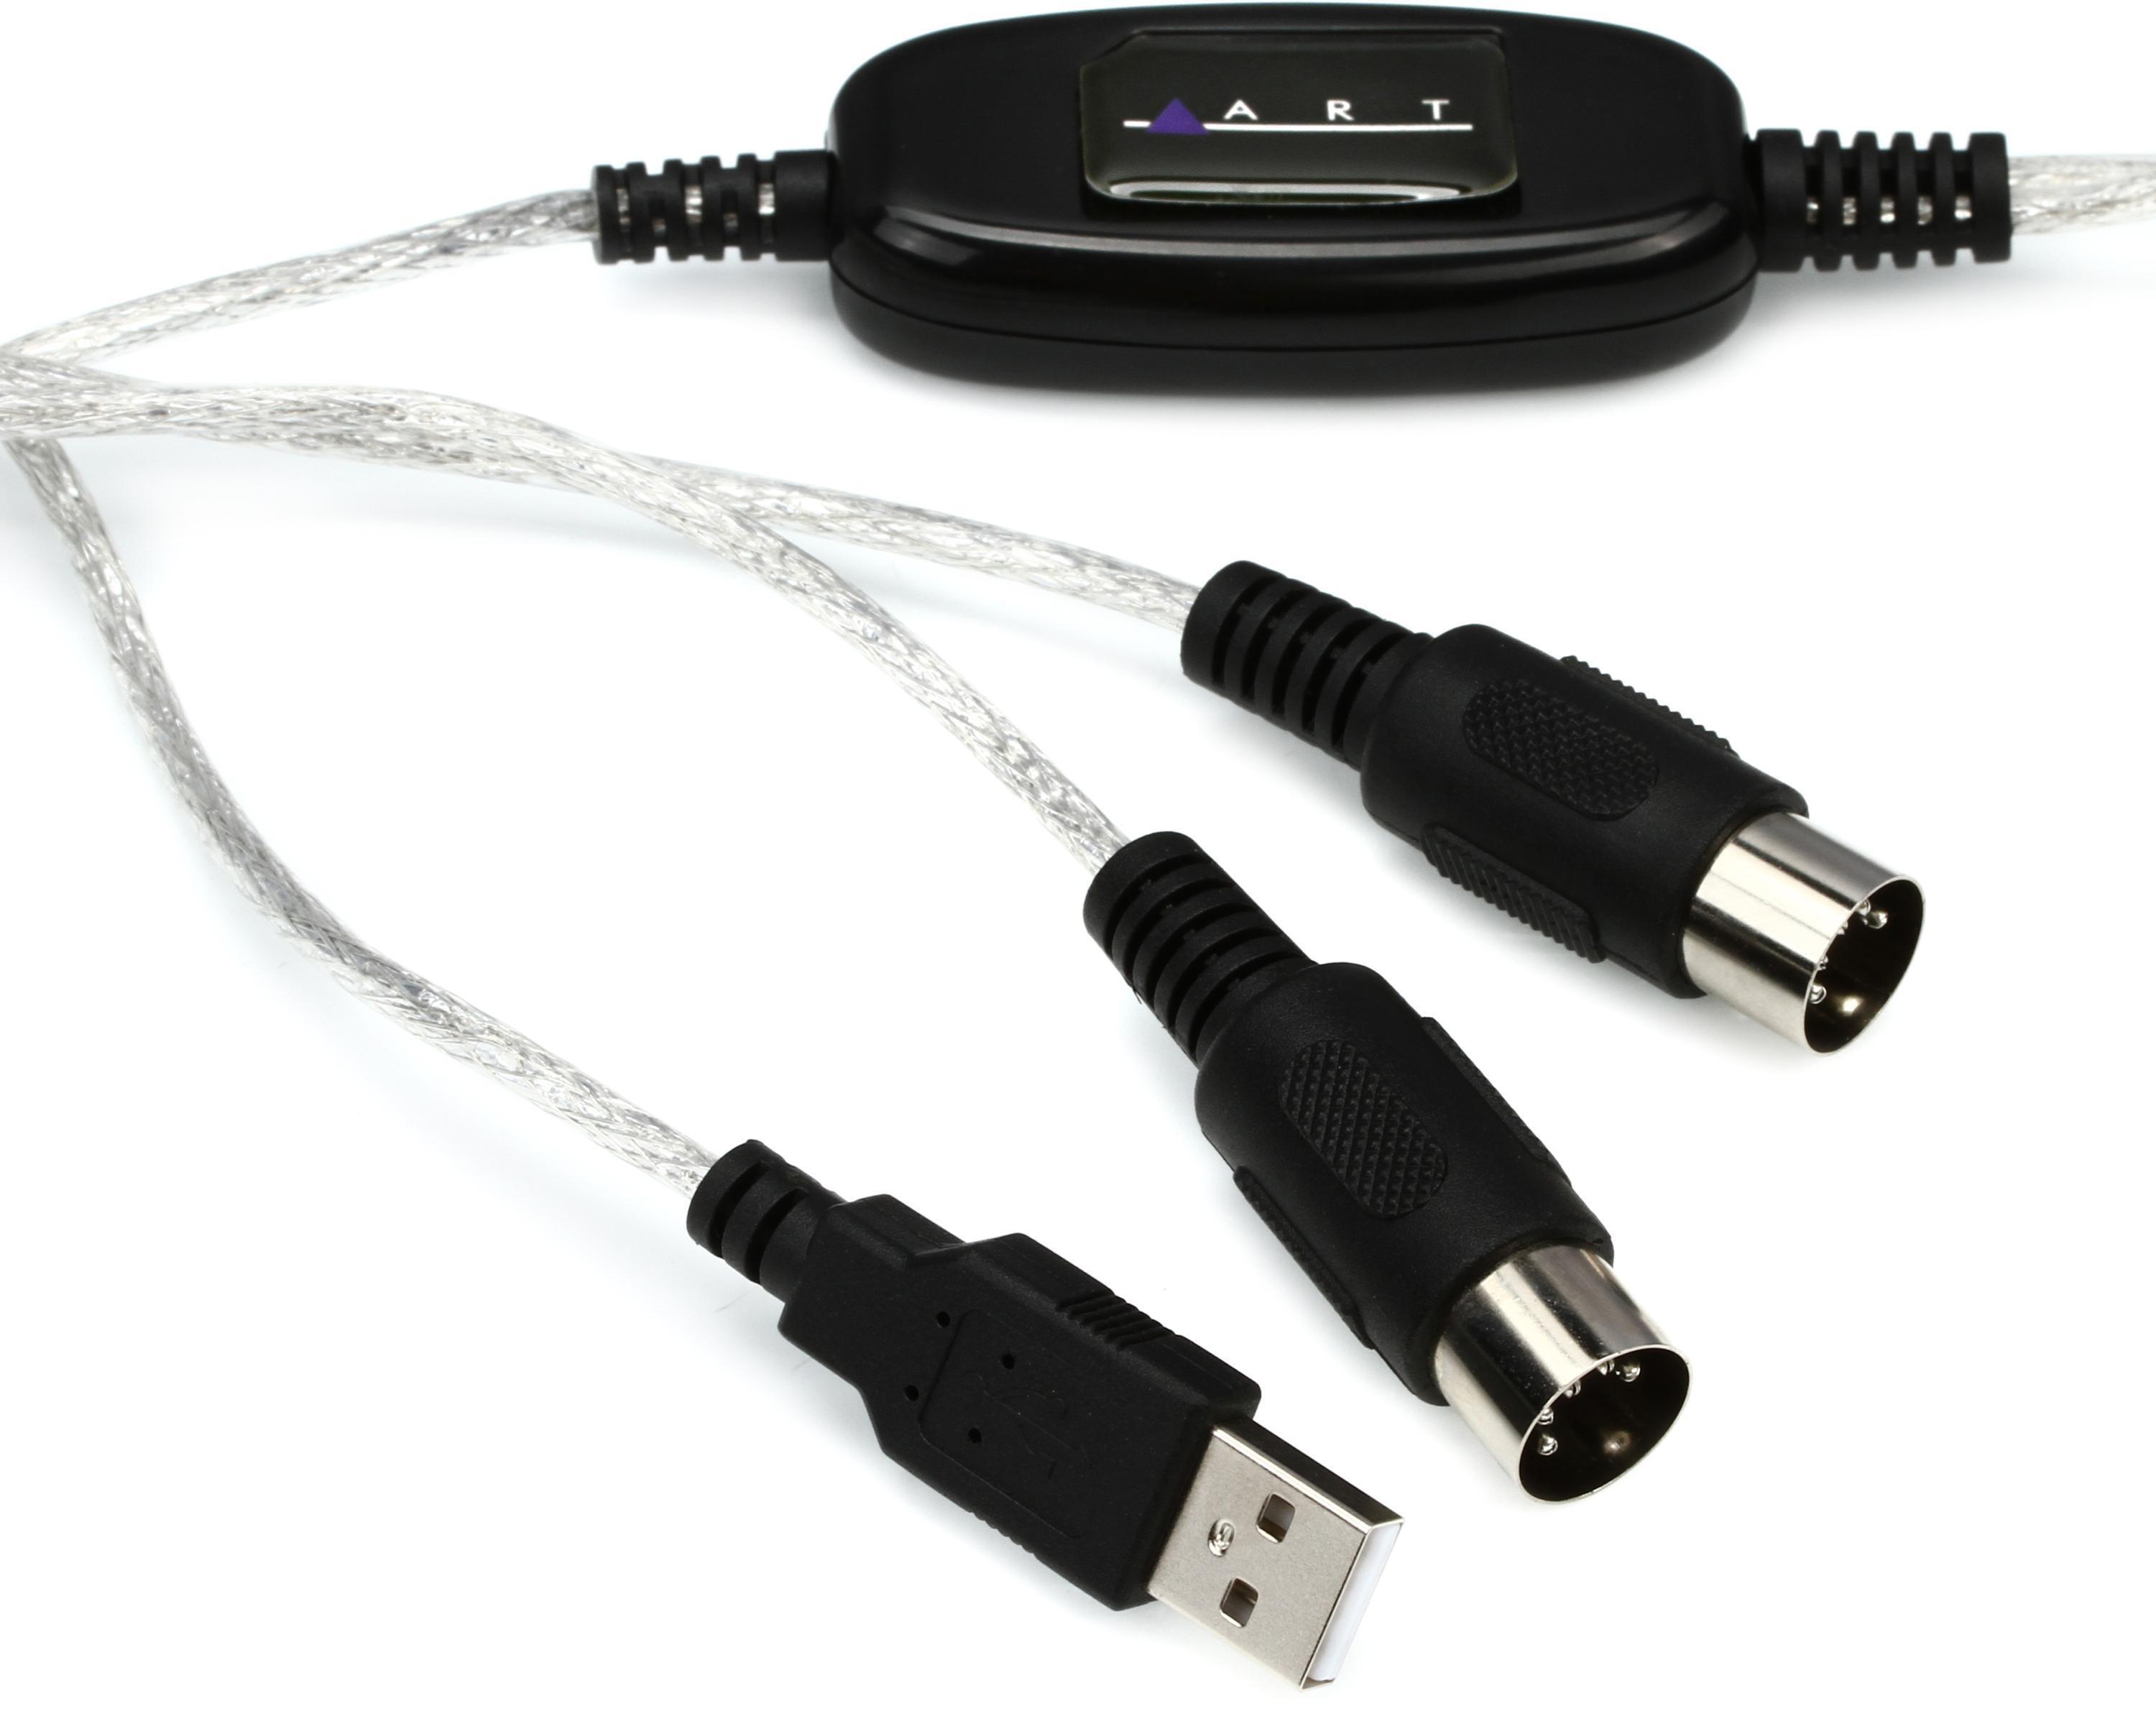 MIDI Cable, MIDI To USB Cable, Cord Keyboard USB MIDI Cable For True Plug &  Play 